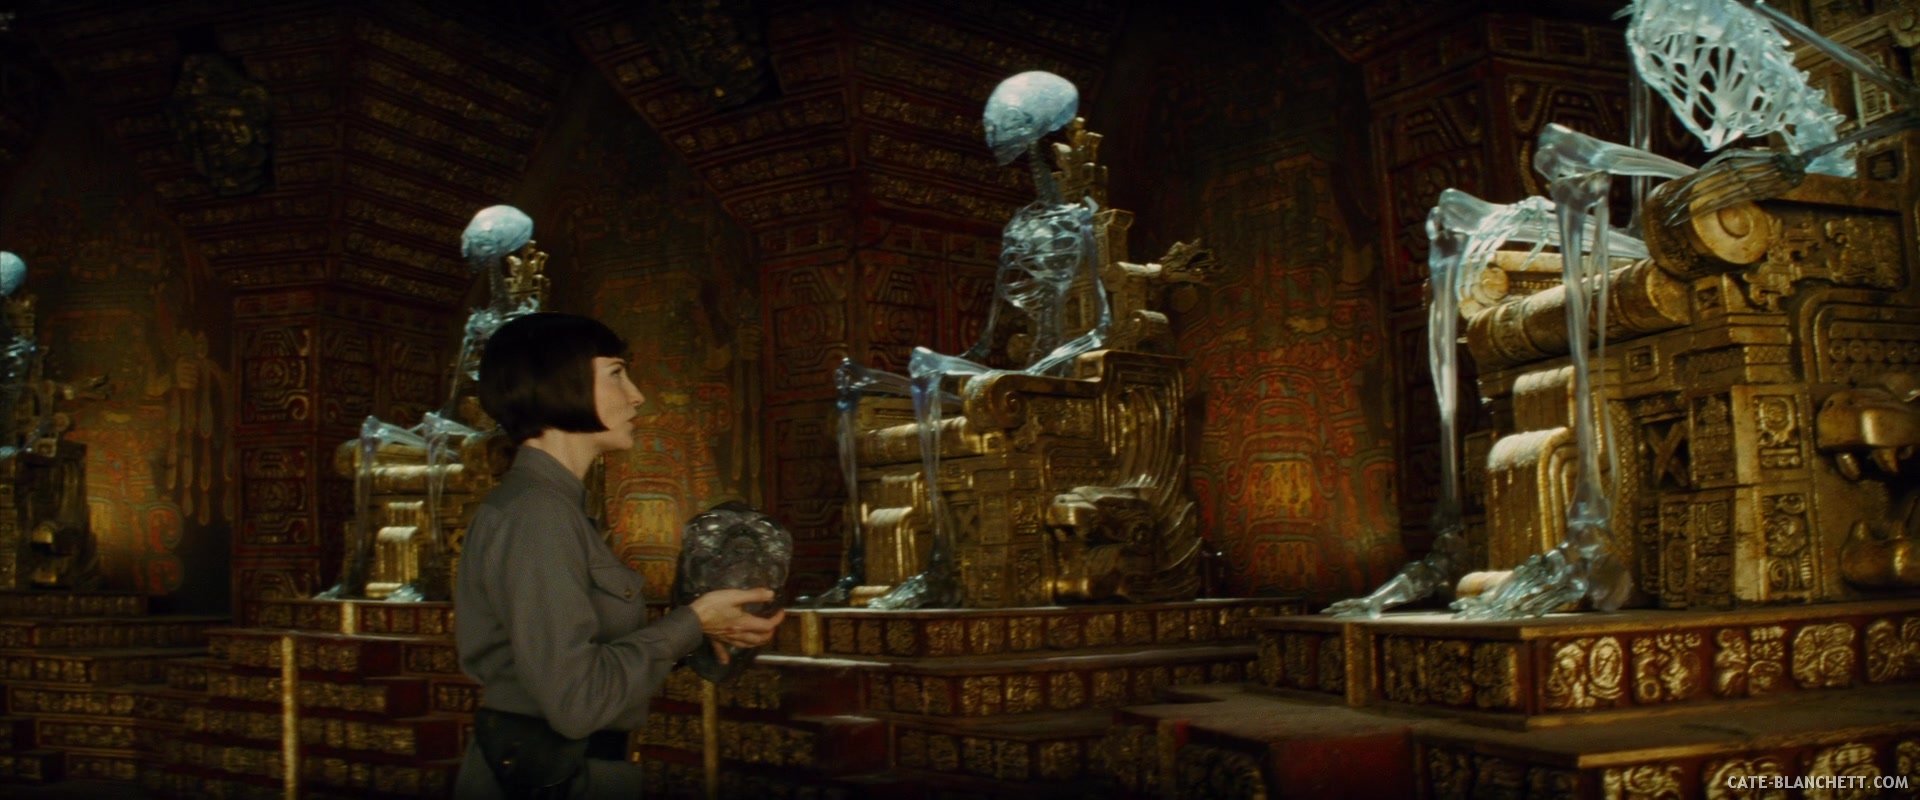 Indiana-Jones-And-The-Kingdom-Of-The-Crystal-Skull-631.jpg